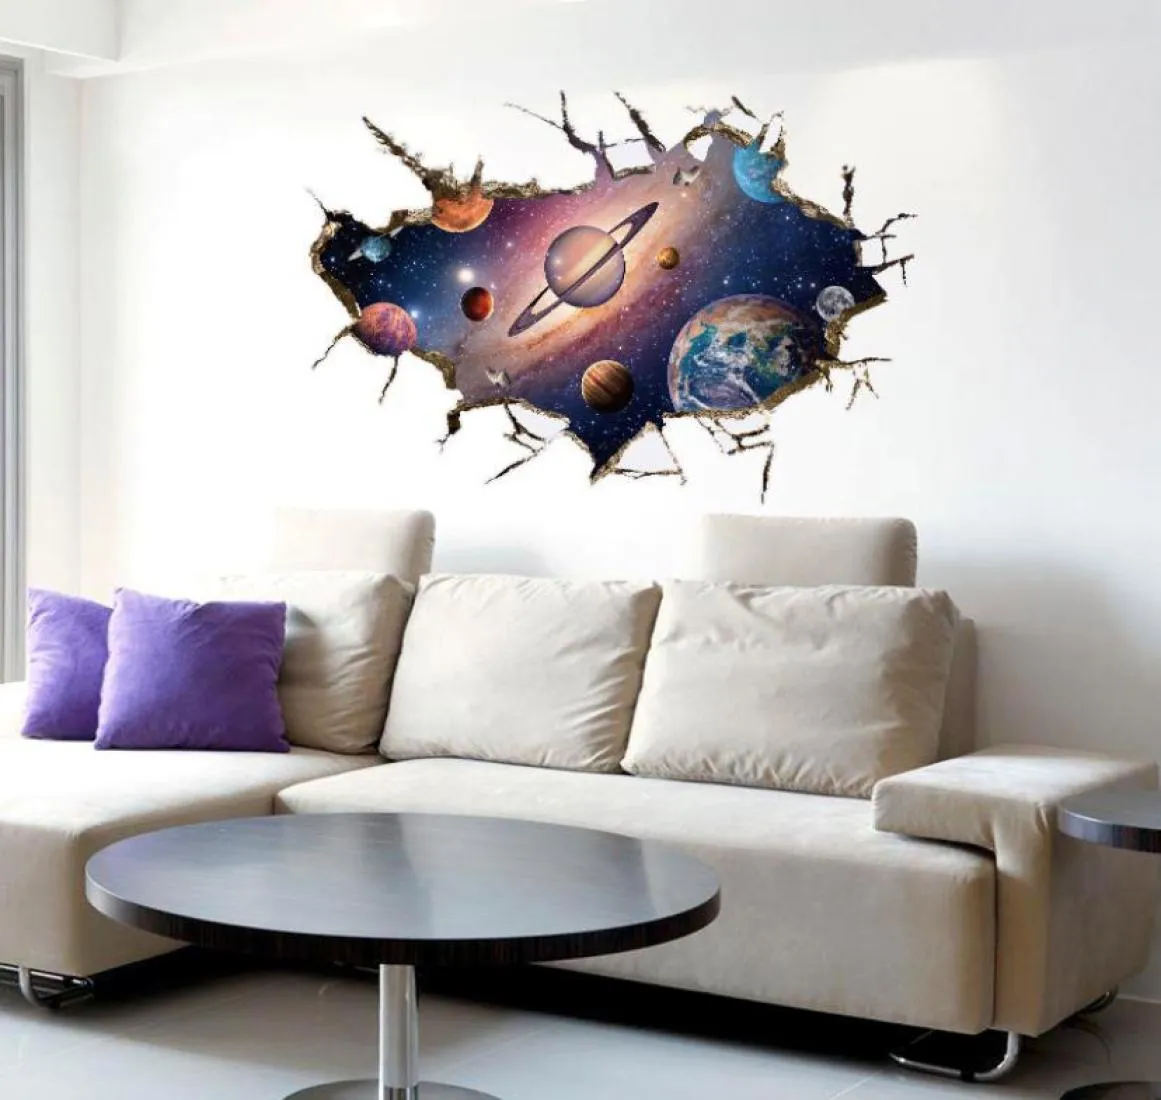 Simanfei Space Galaxy Planets Wall Sticker 2019防水アート壁画デカールユニバーススターウォールペーパーキッズルーム飾るLJ2011289181157